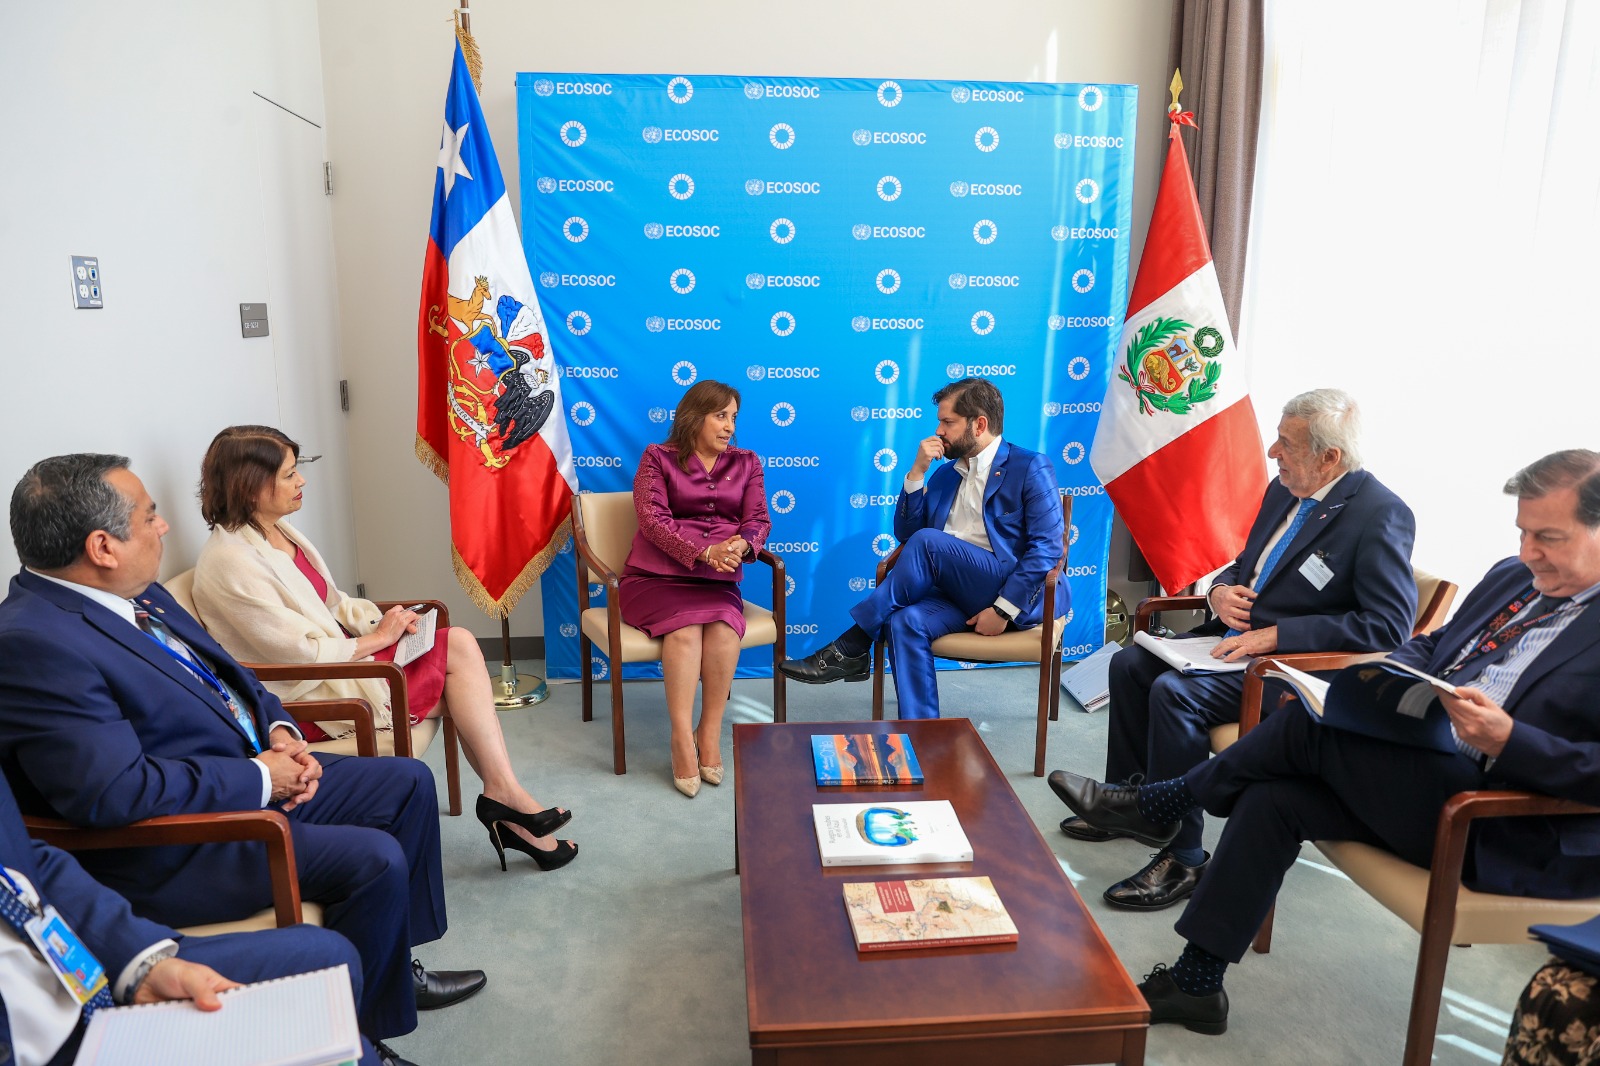 Pedro Castillo criticizes Chilean president for meeting with Boluarte